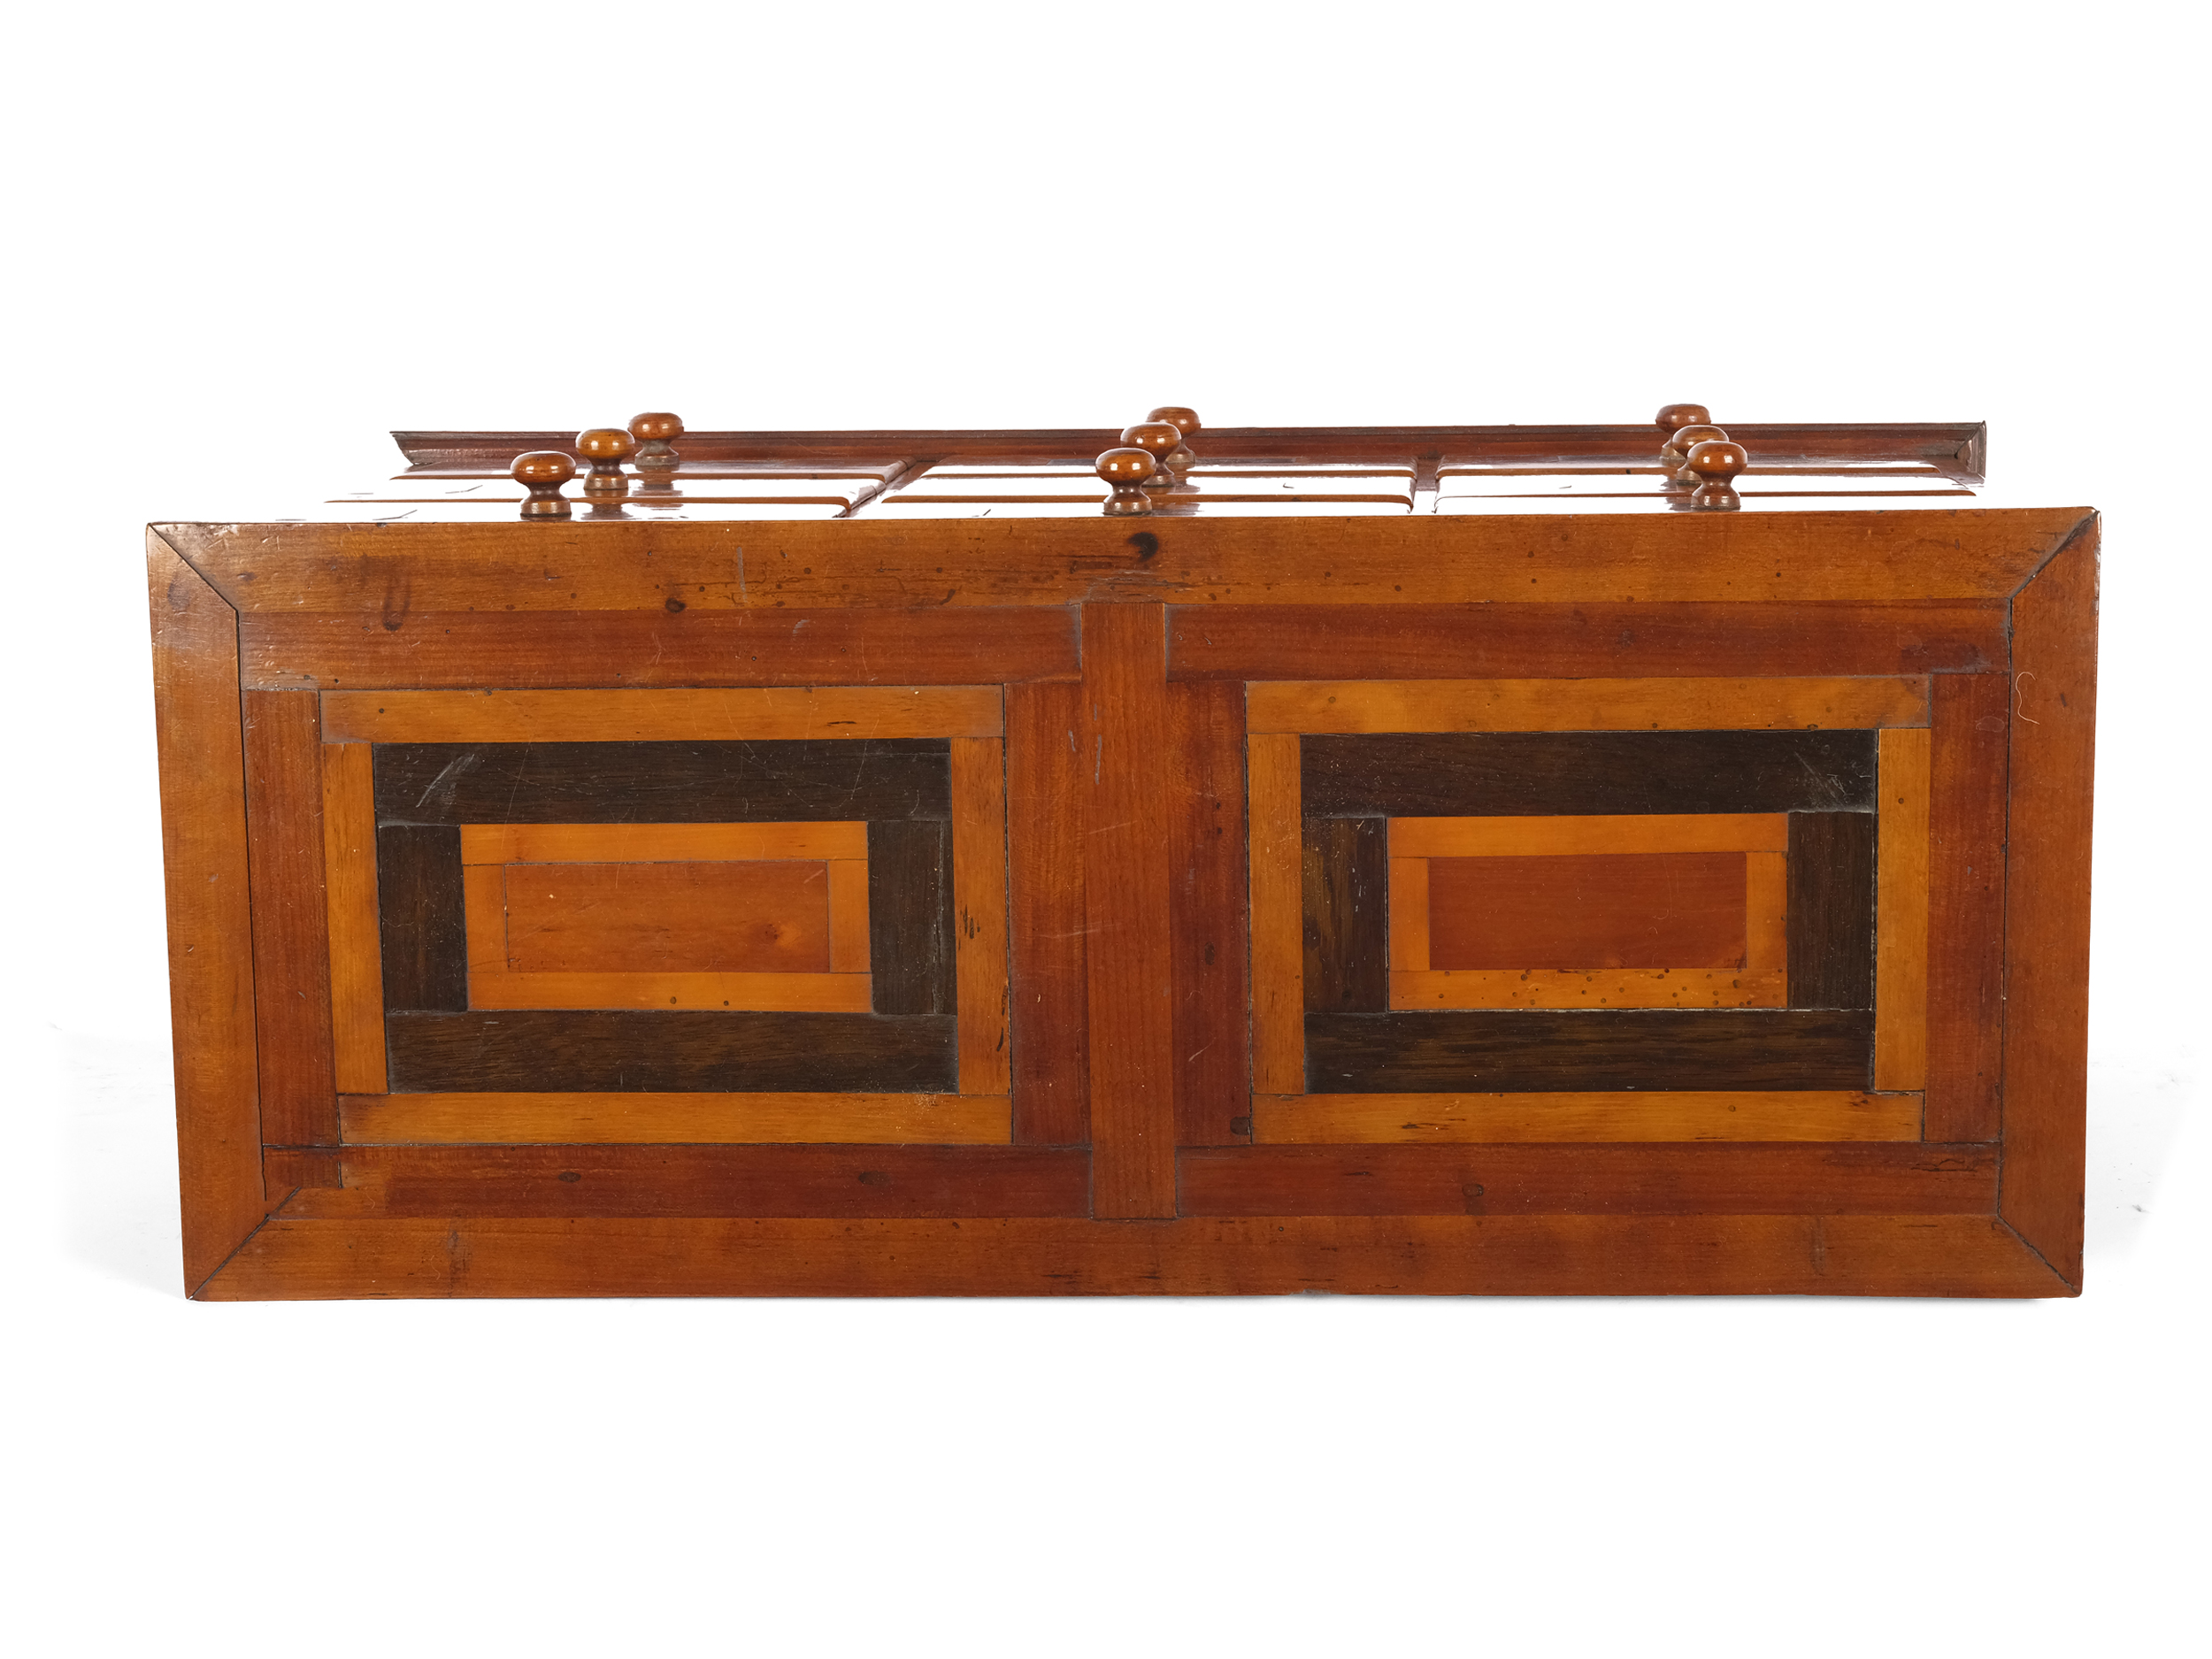 Top box, 9 drawers, around 1760/70 - Image 6 of 7